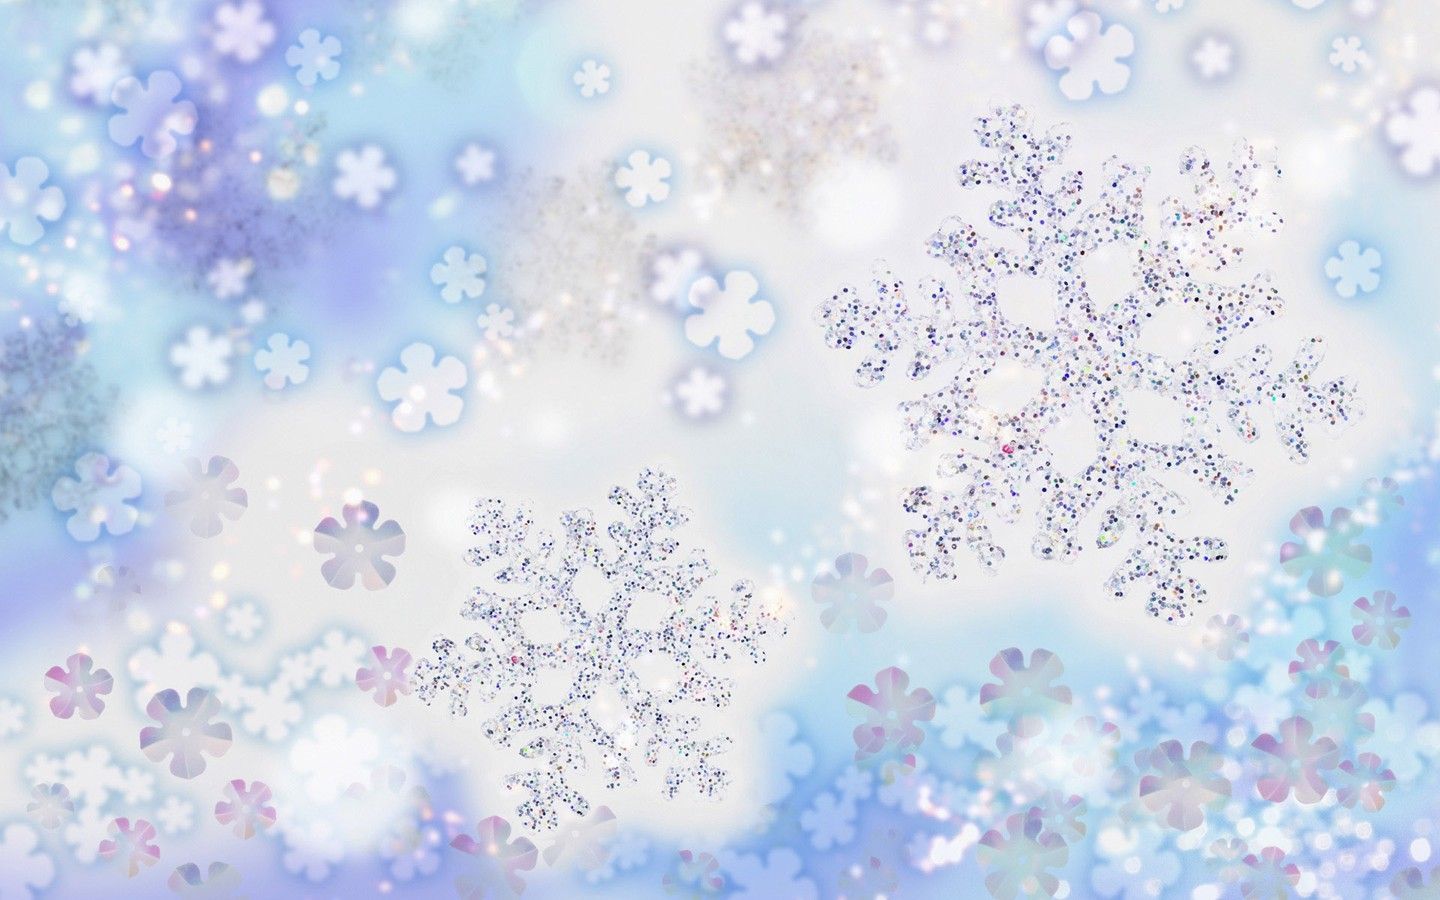 Winter Christmas Wallpaper Free. Snowflake wallpaper, Winter wallpaper, Free winter wallpaper